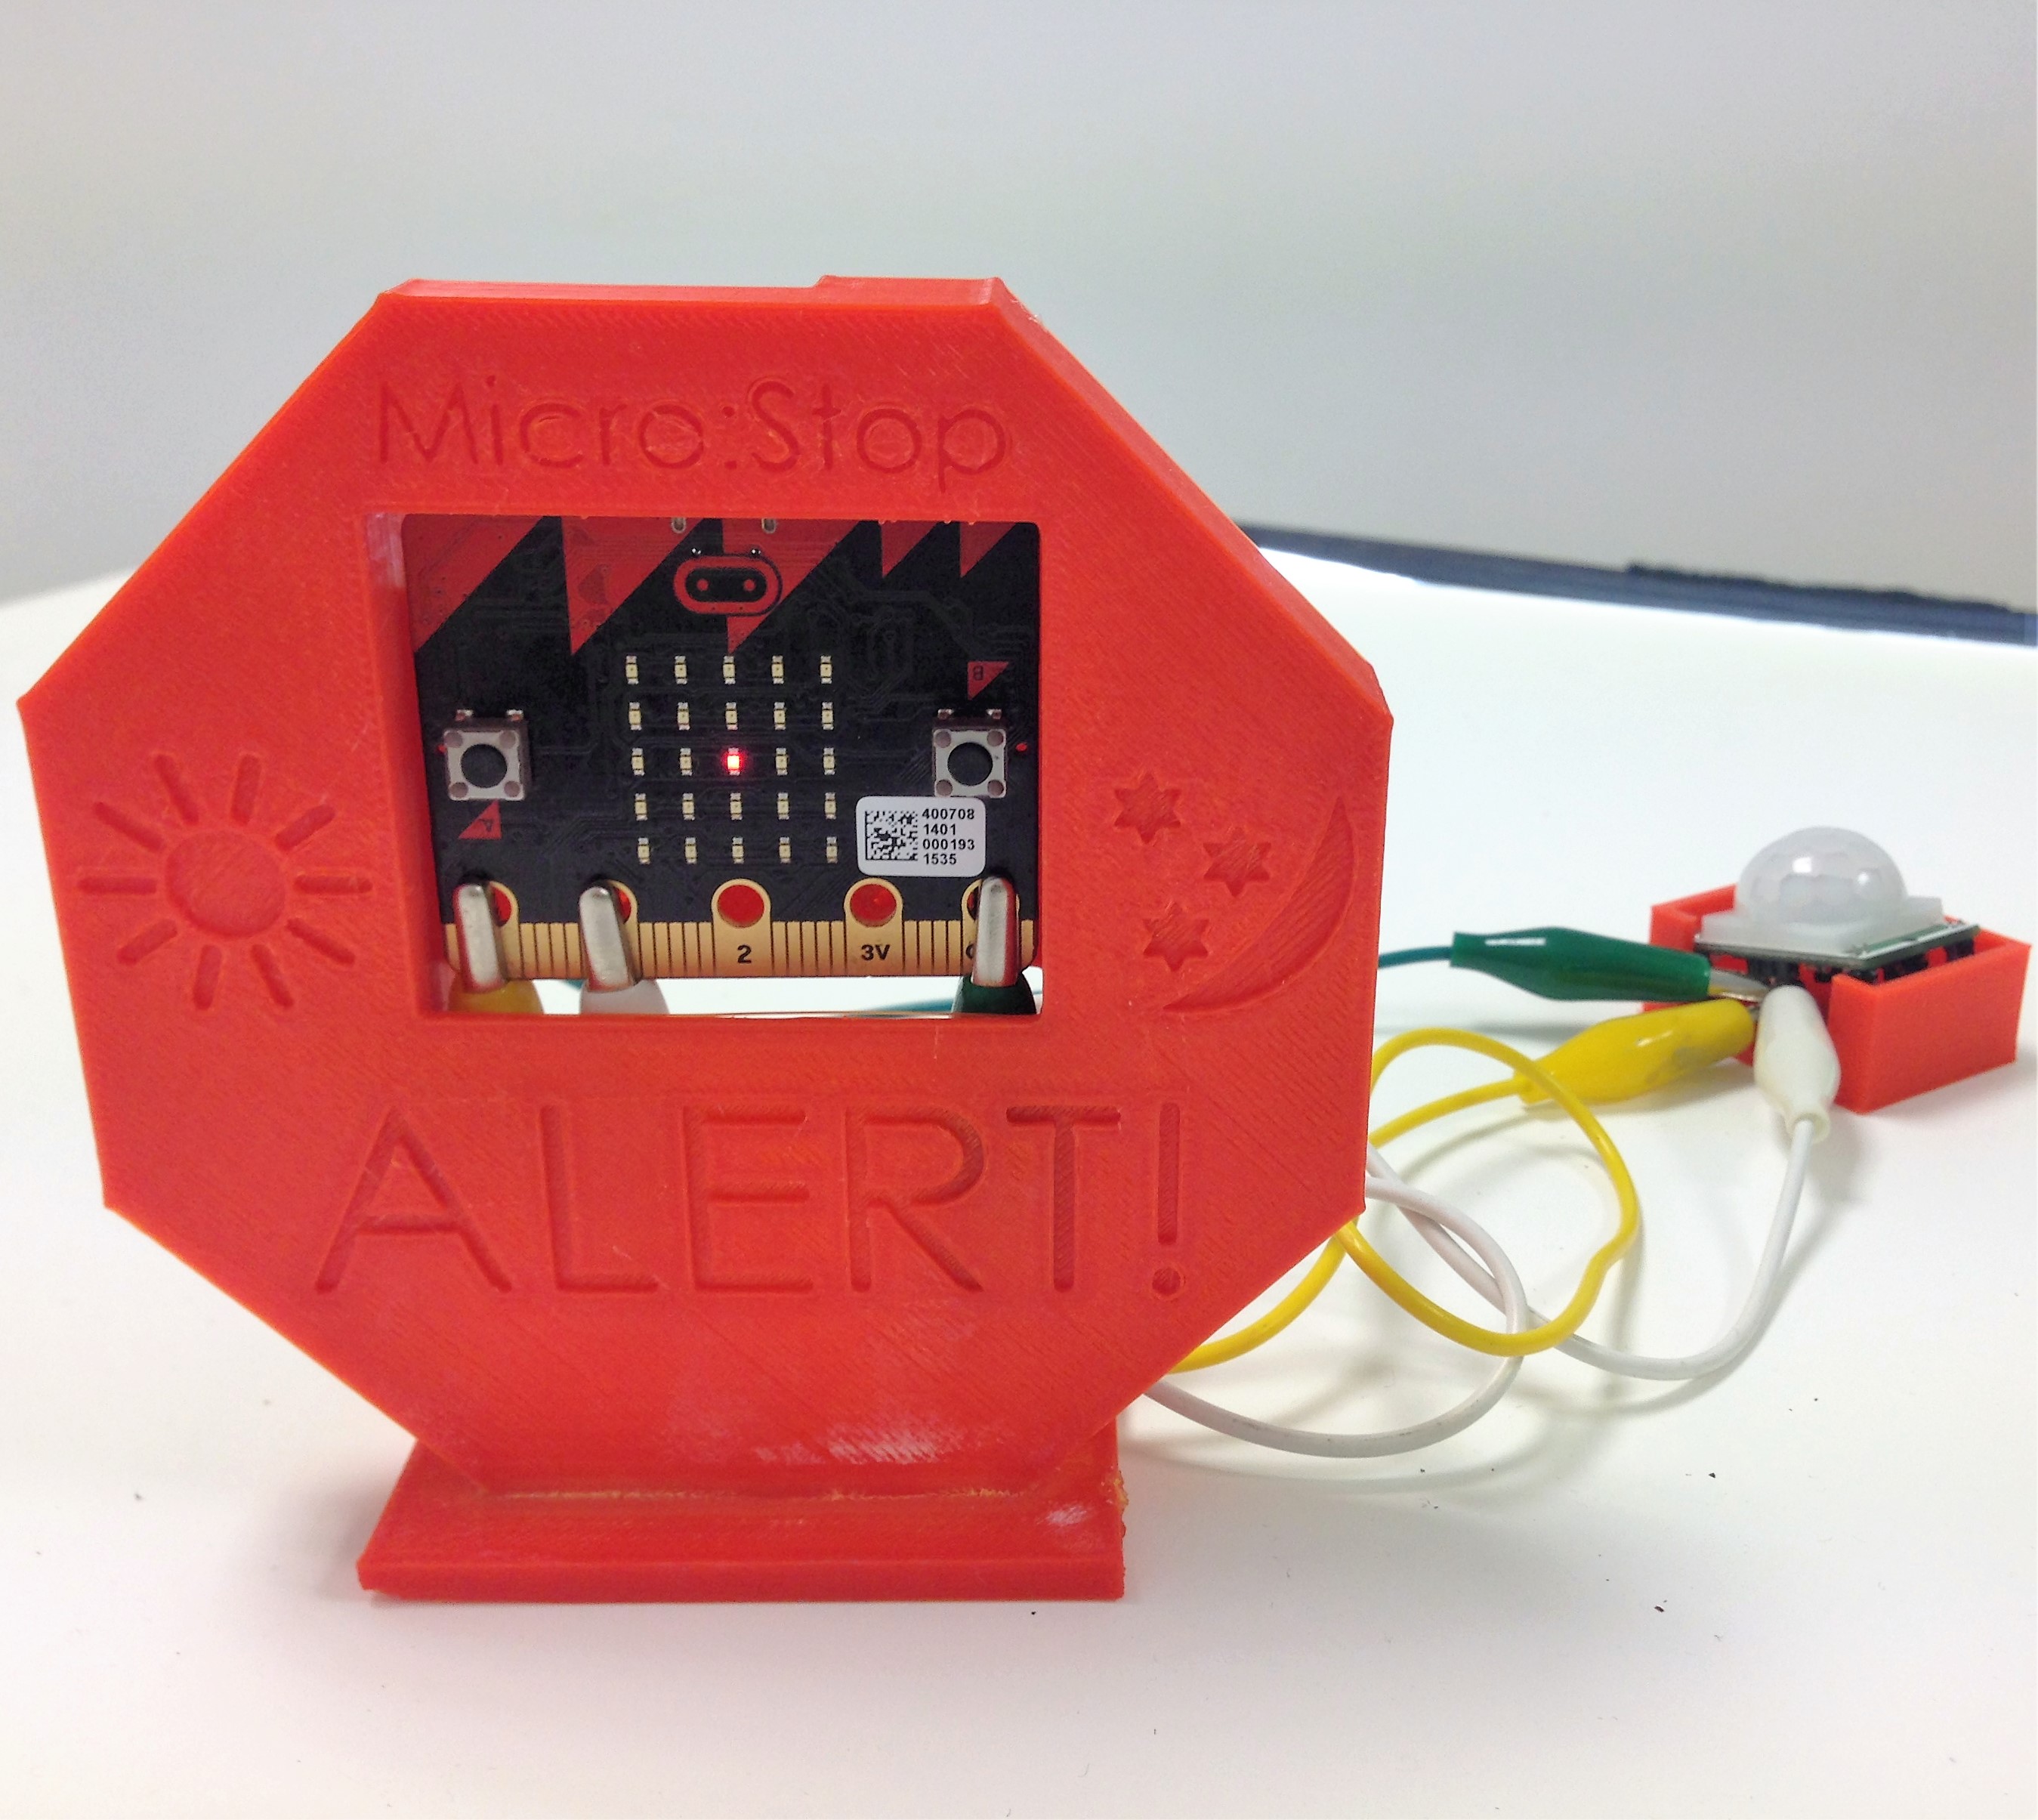 Micro:Stop Sensor Alarm